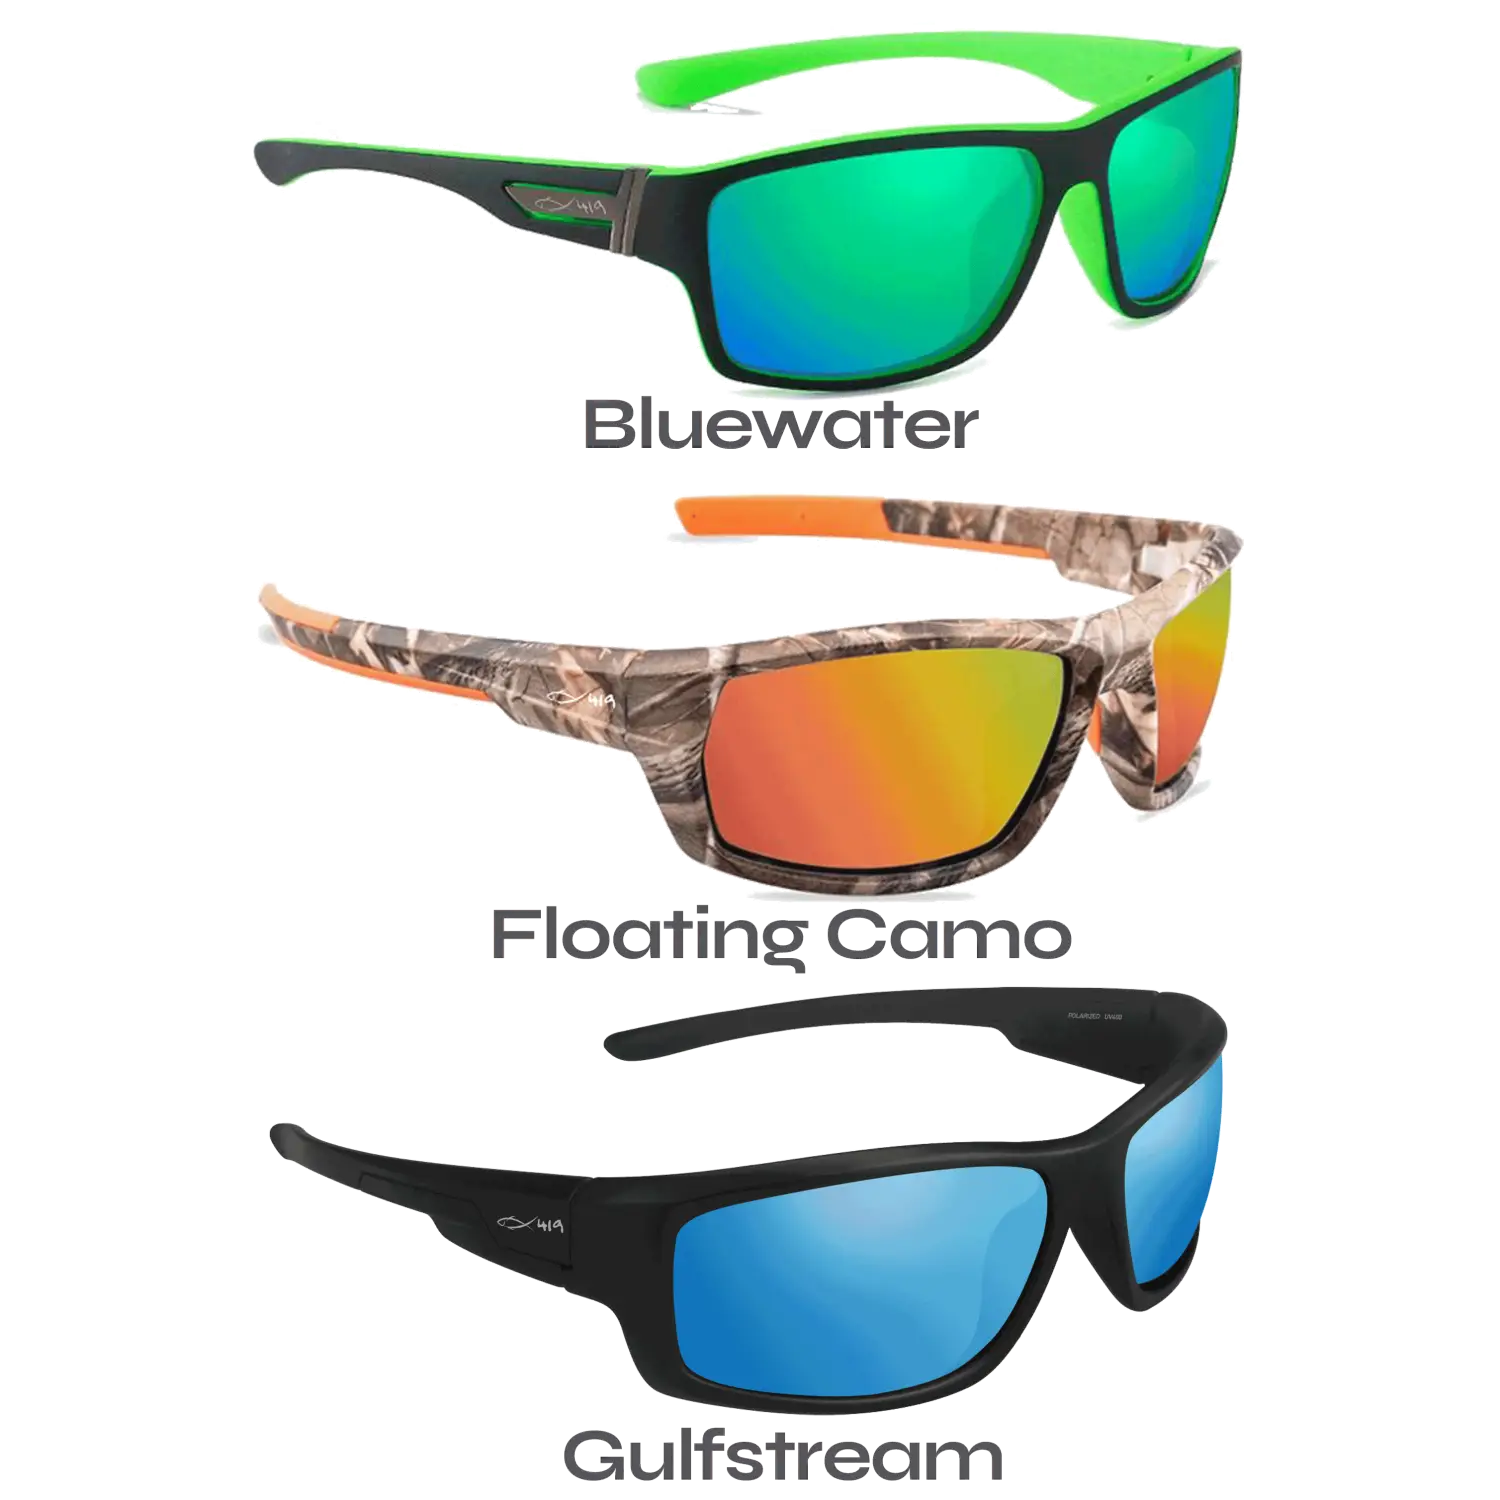 Fish 419’s New Sunglasses Styles